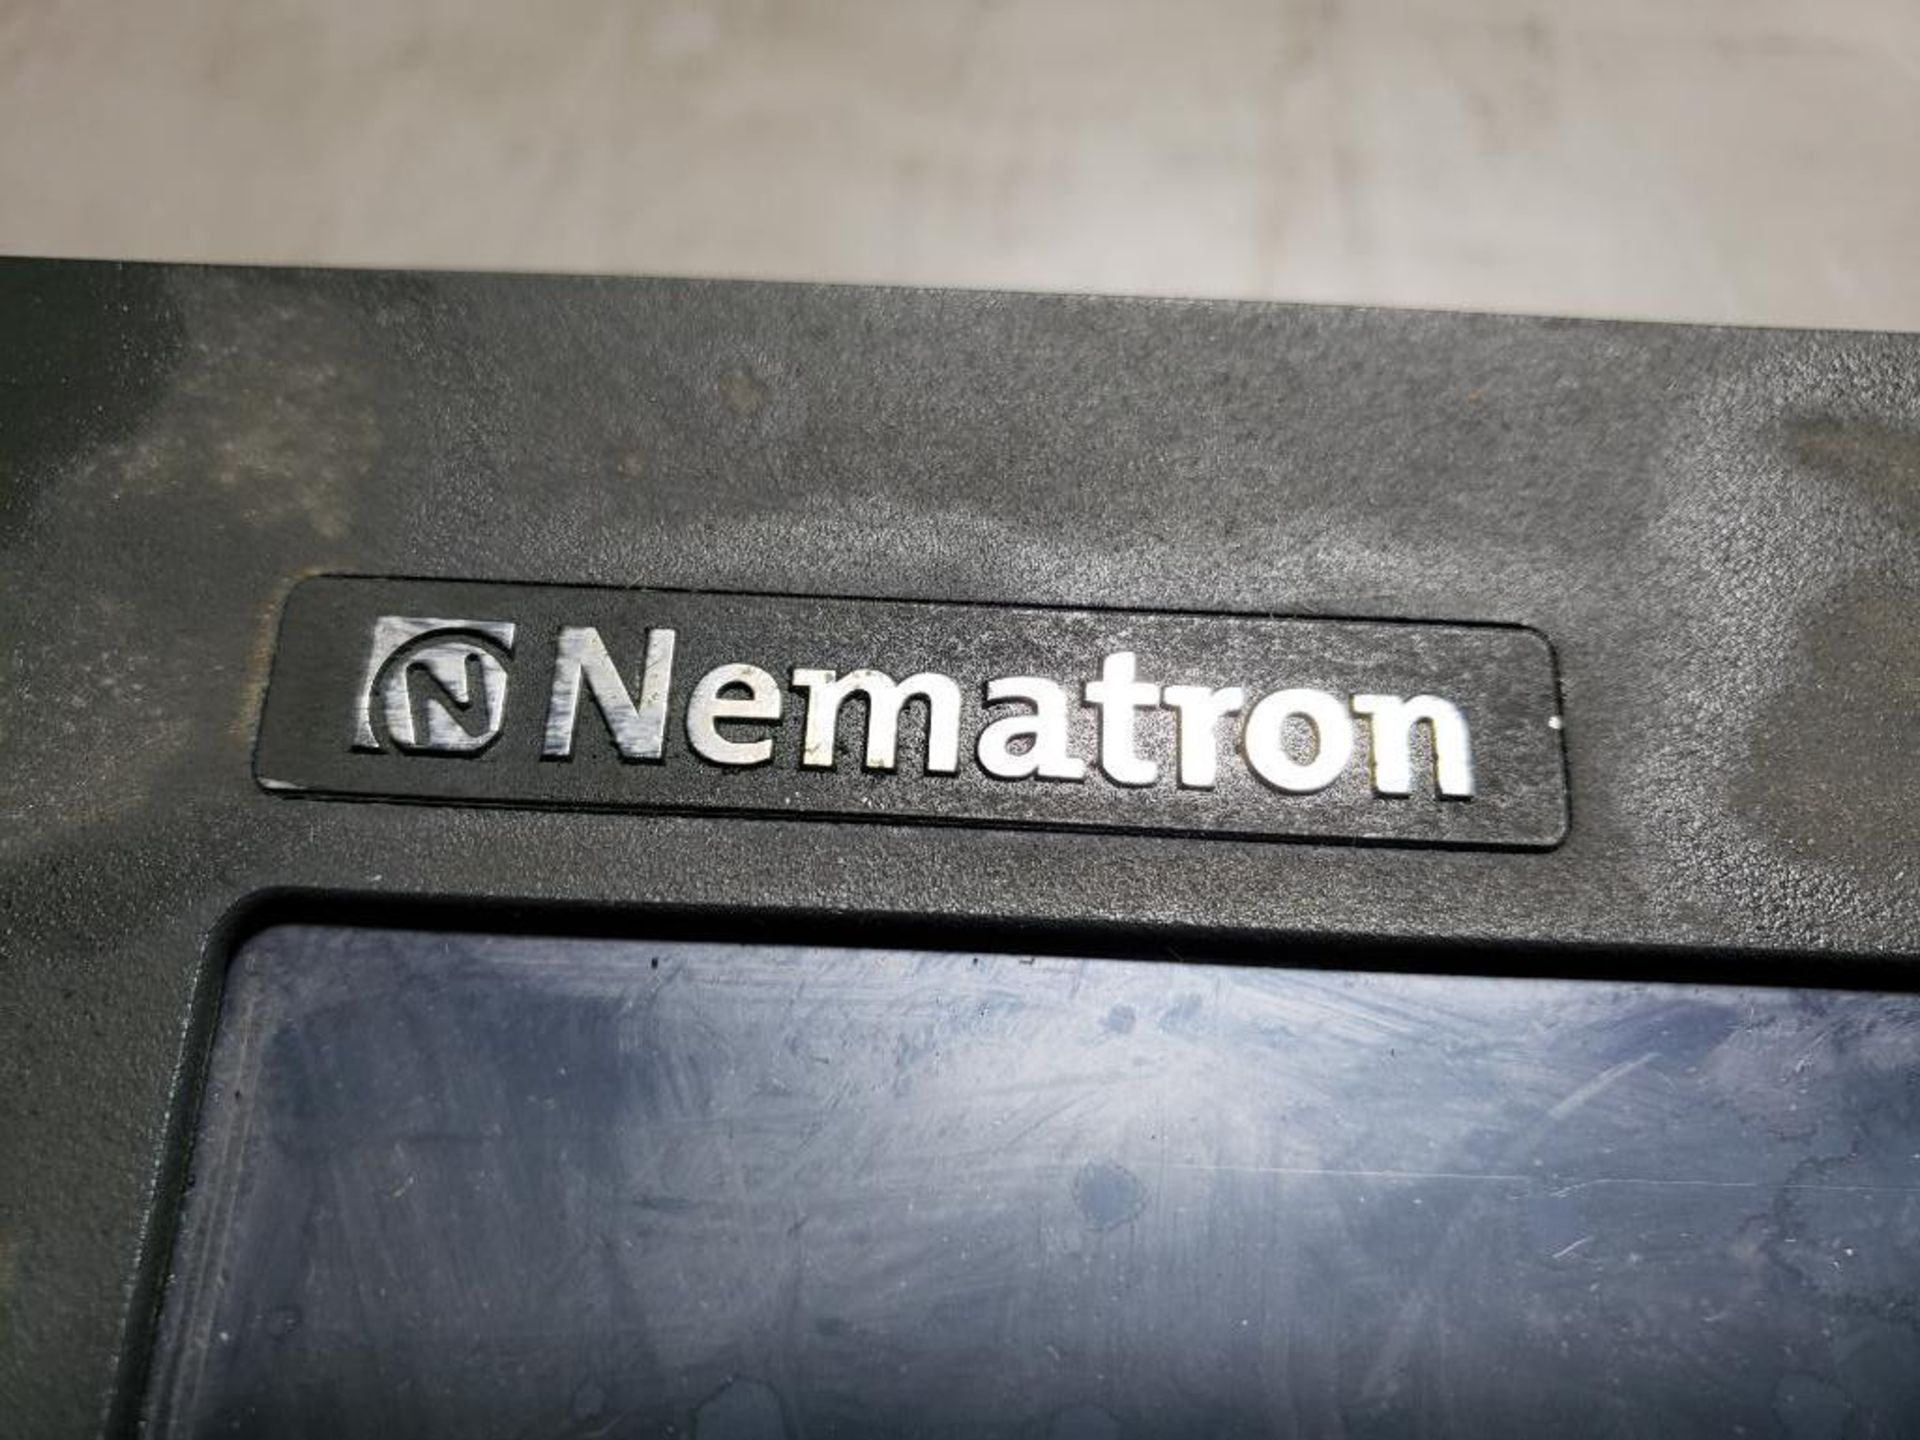 Nematron HMI industrial computer panel. Part number ePC12T-N2A0XAA0. - Image 2 of 6